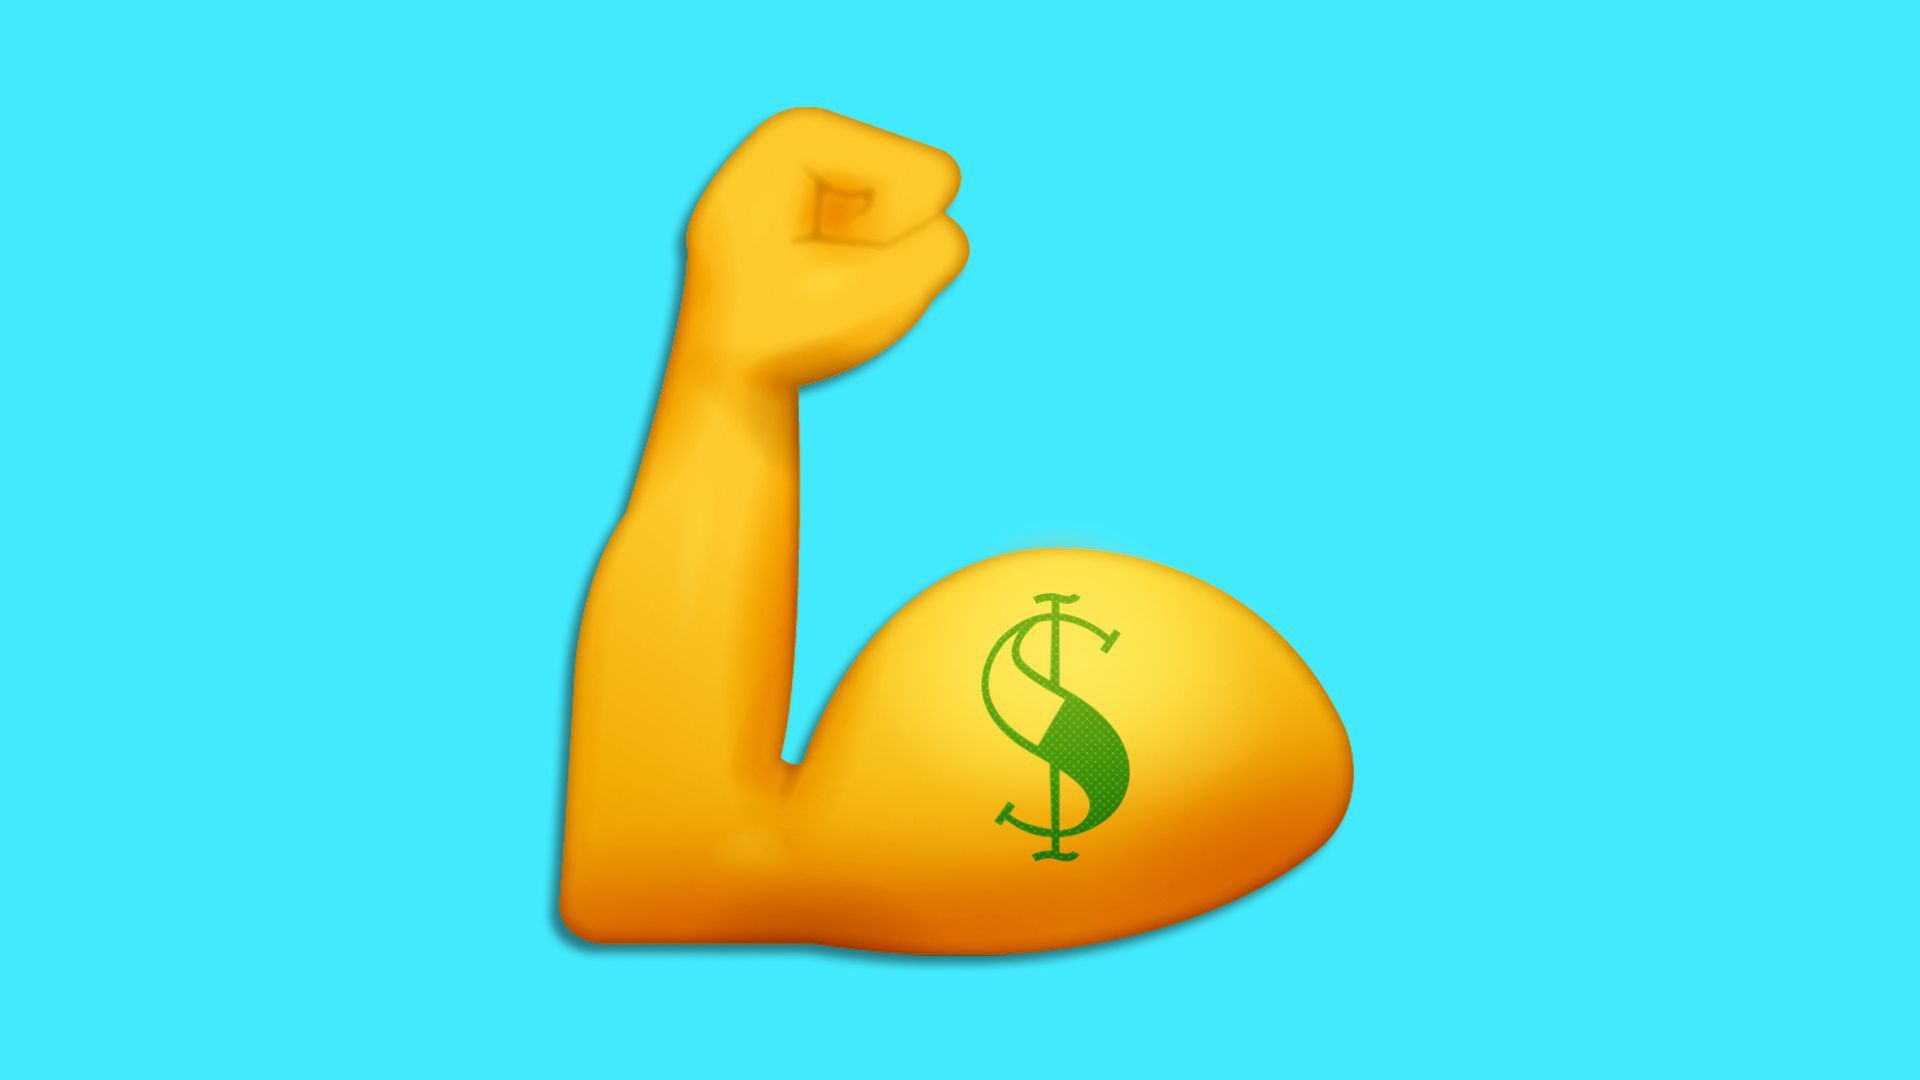 Cartoon arm flexing bicep with dollar sign tattoo